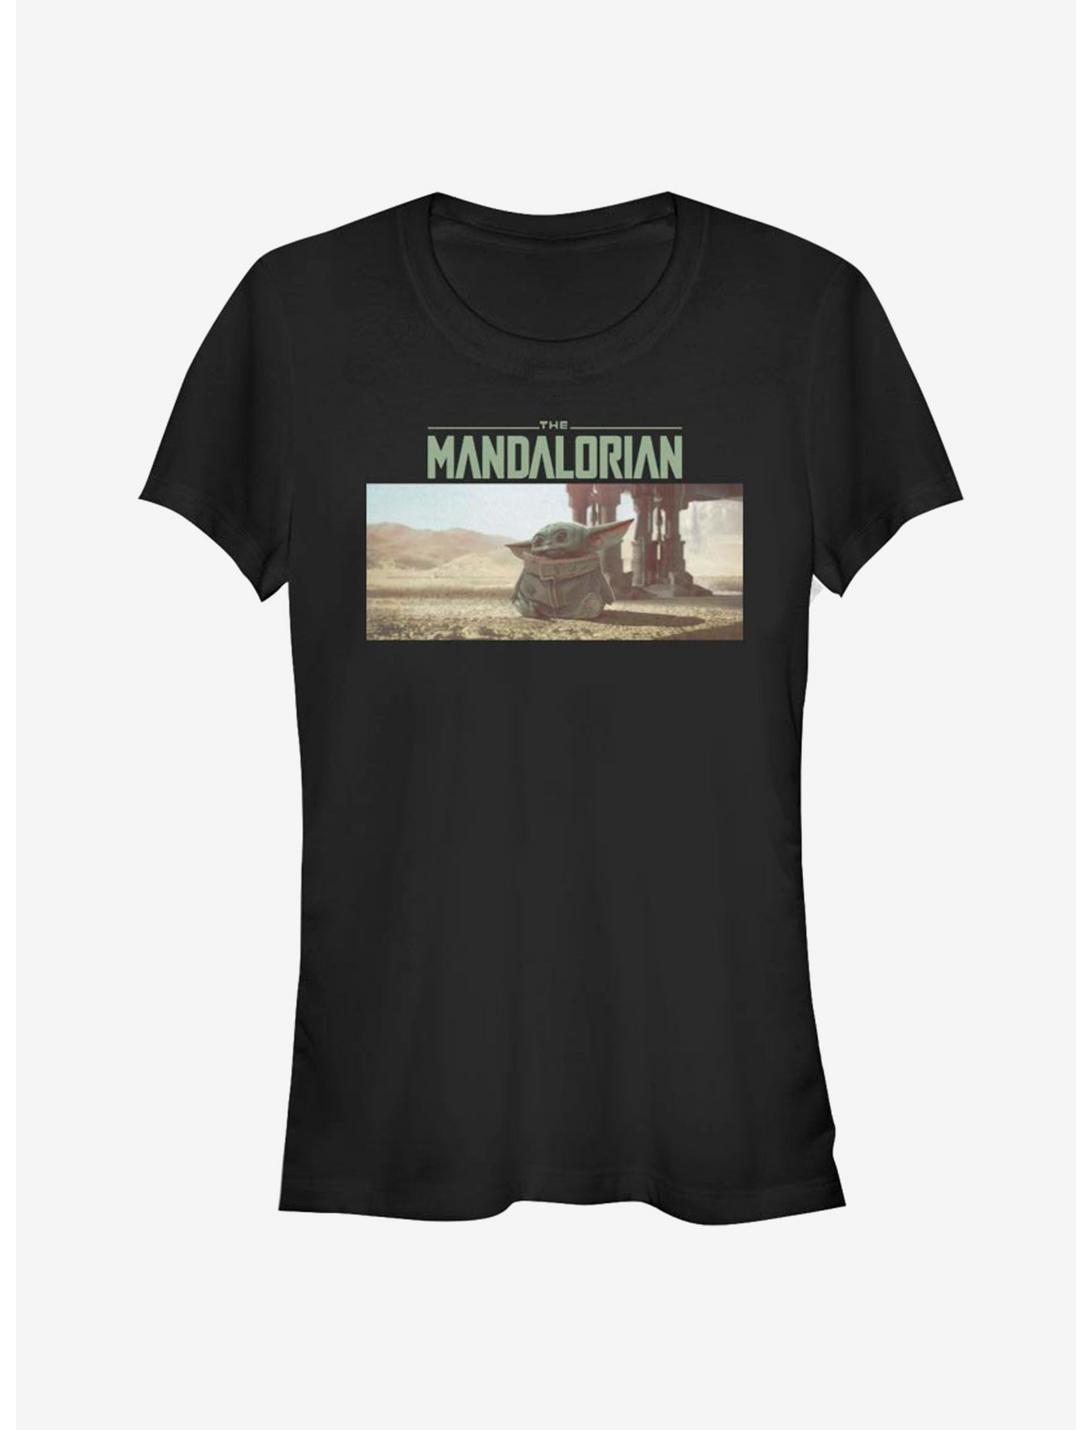 Star Wars The Mandalorian The Child Still Looking Girls T-Shirt, BLACK, hi-res